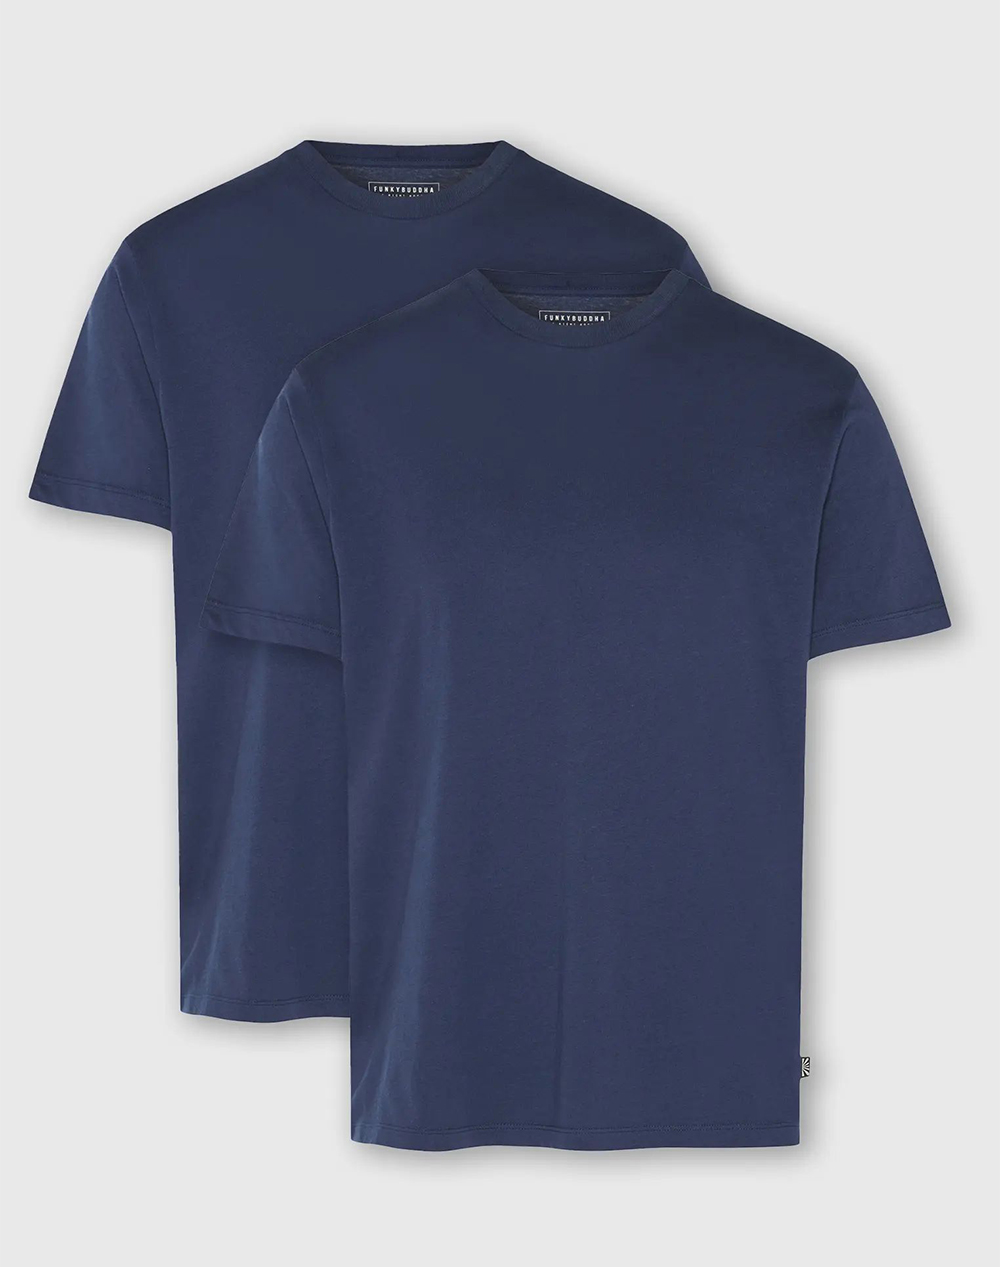 FUNKY BUDDHA Ανδρικά μονόχρωμα t-shirts (σετ 2 τεμ.) FBM009-350-04-NAVY NavyBlue